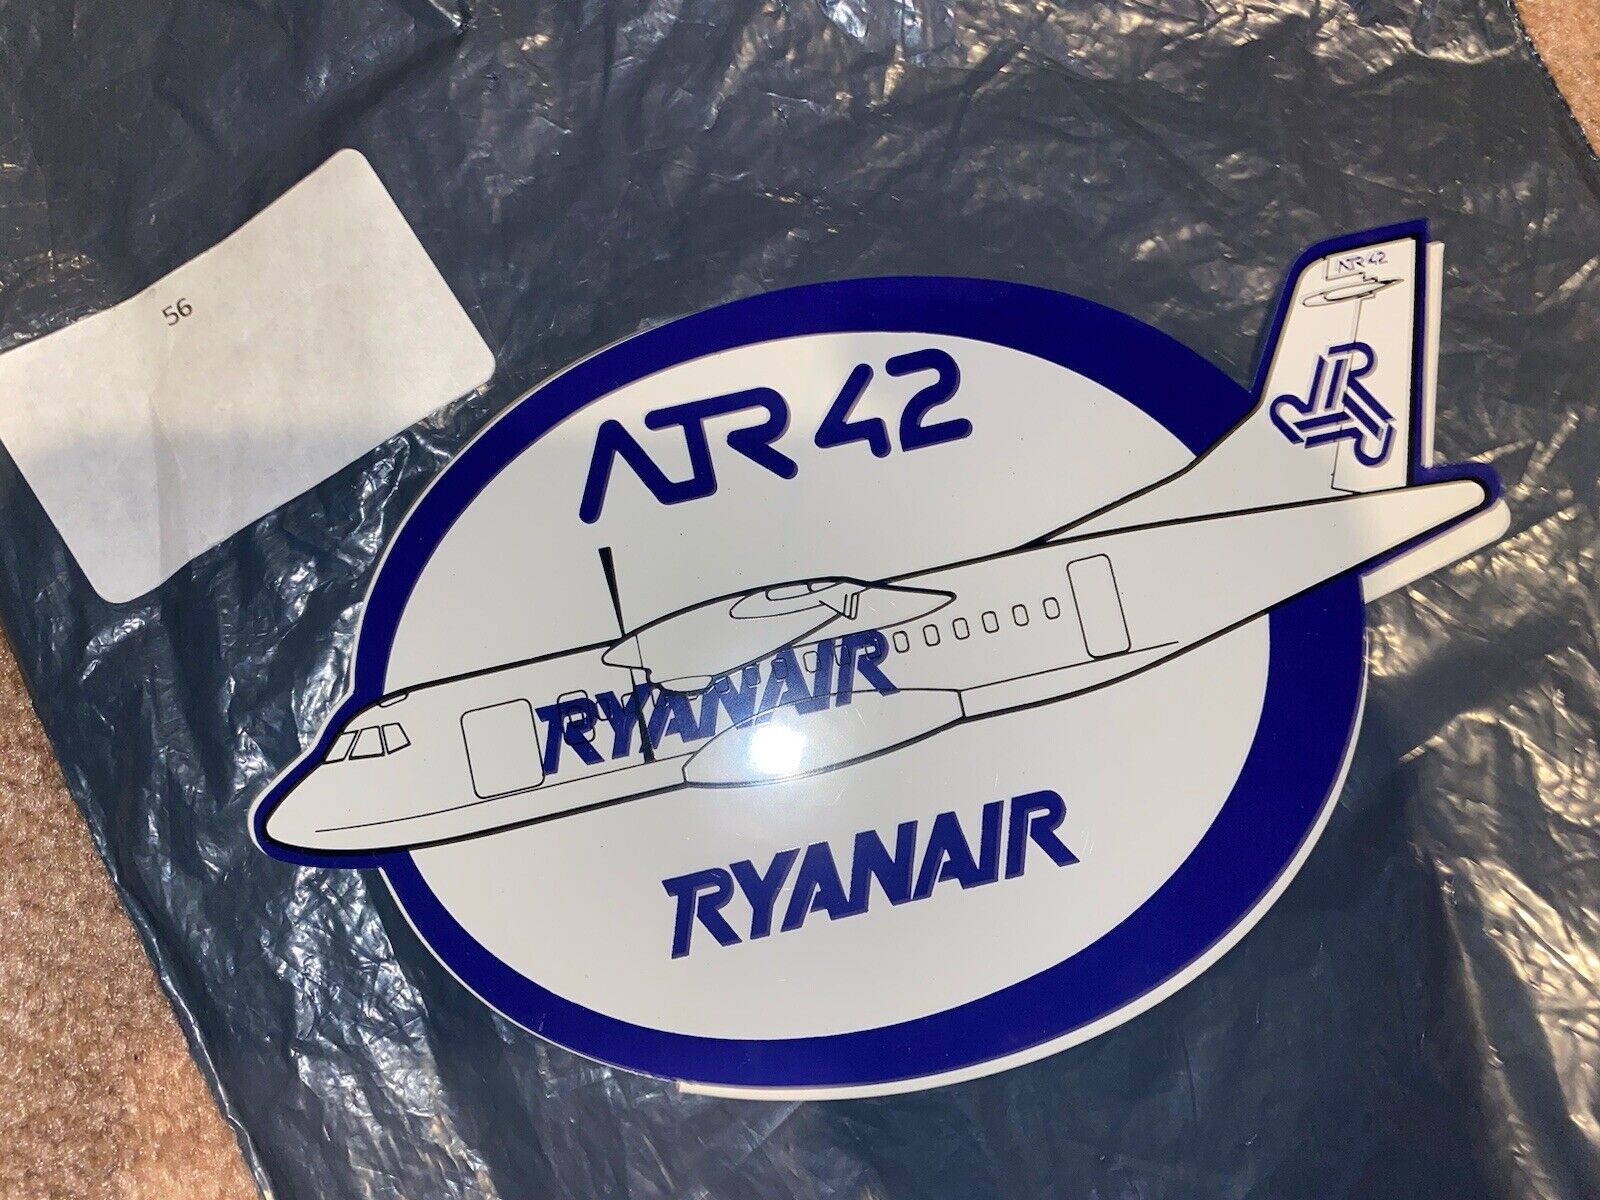 RYAN AIR ATR 42 UK IRELAND LAPTOP STICKER RARE AIRLINE ITEM NEW MINT